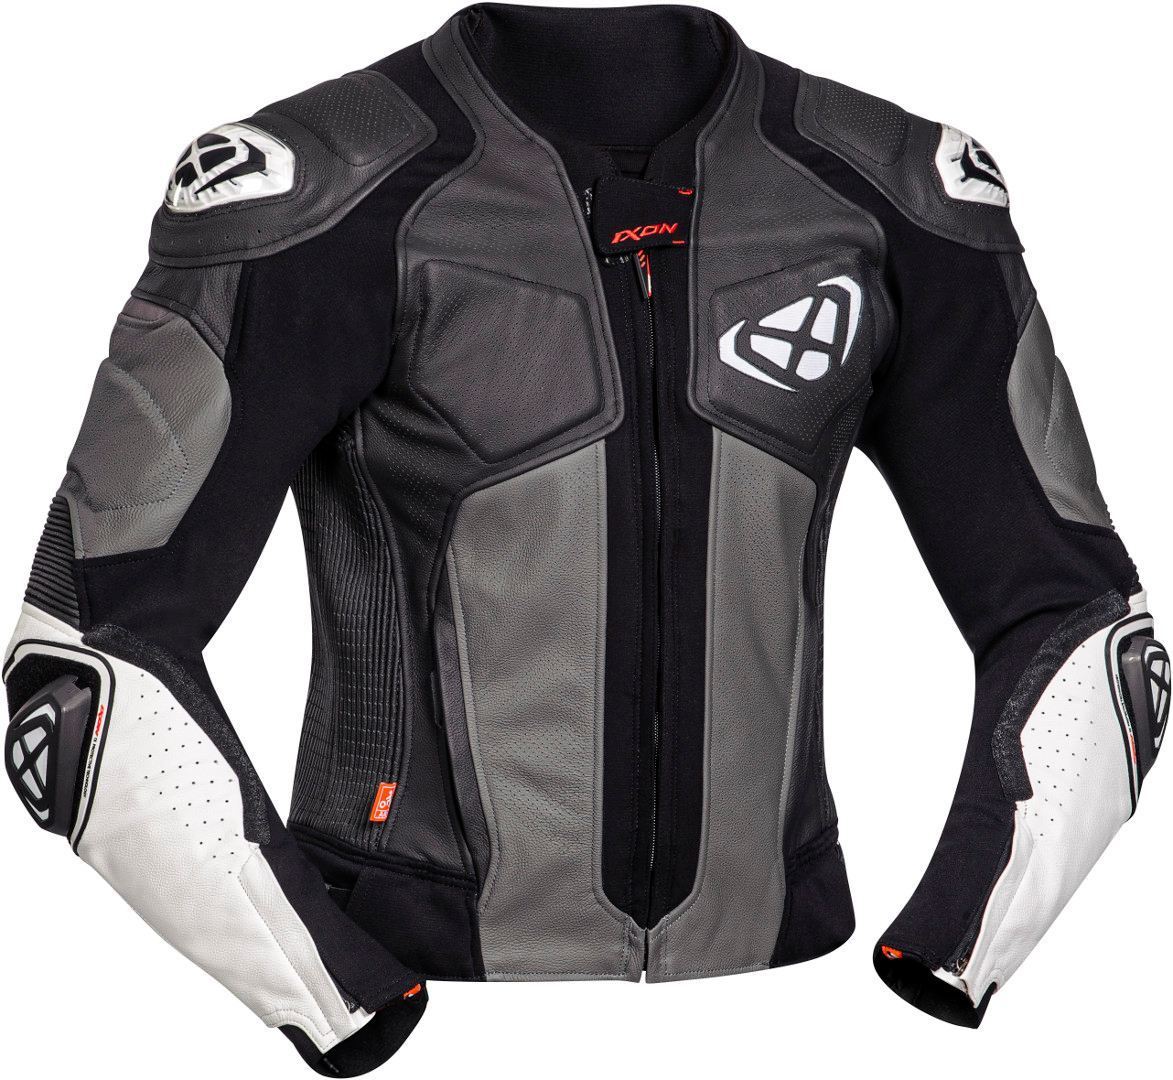 Ixon Vendetta Evo Motorcycle Leather Jacket, black-grey-white, Size S, black-grey-white, Size S